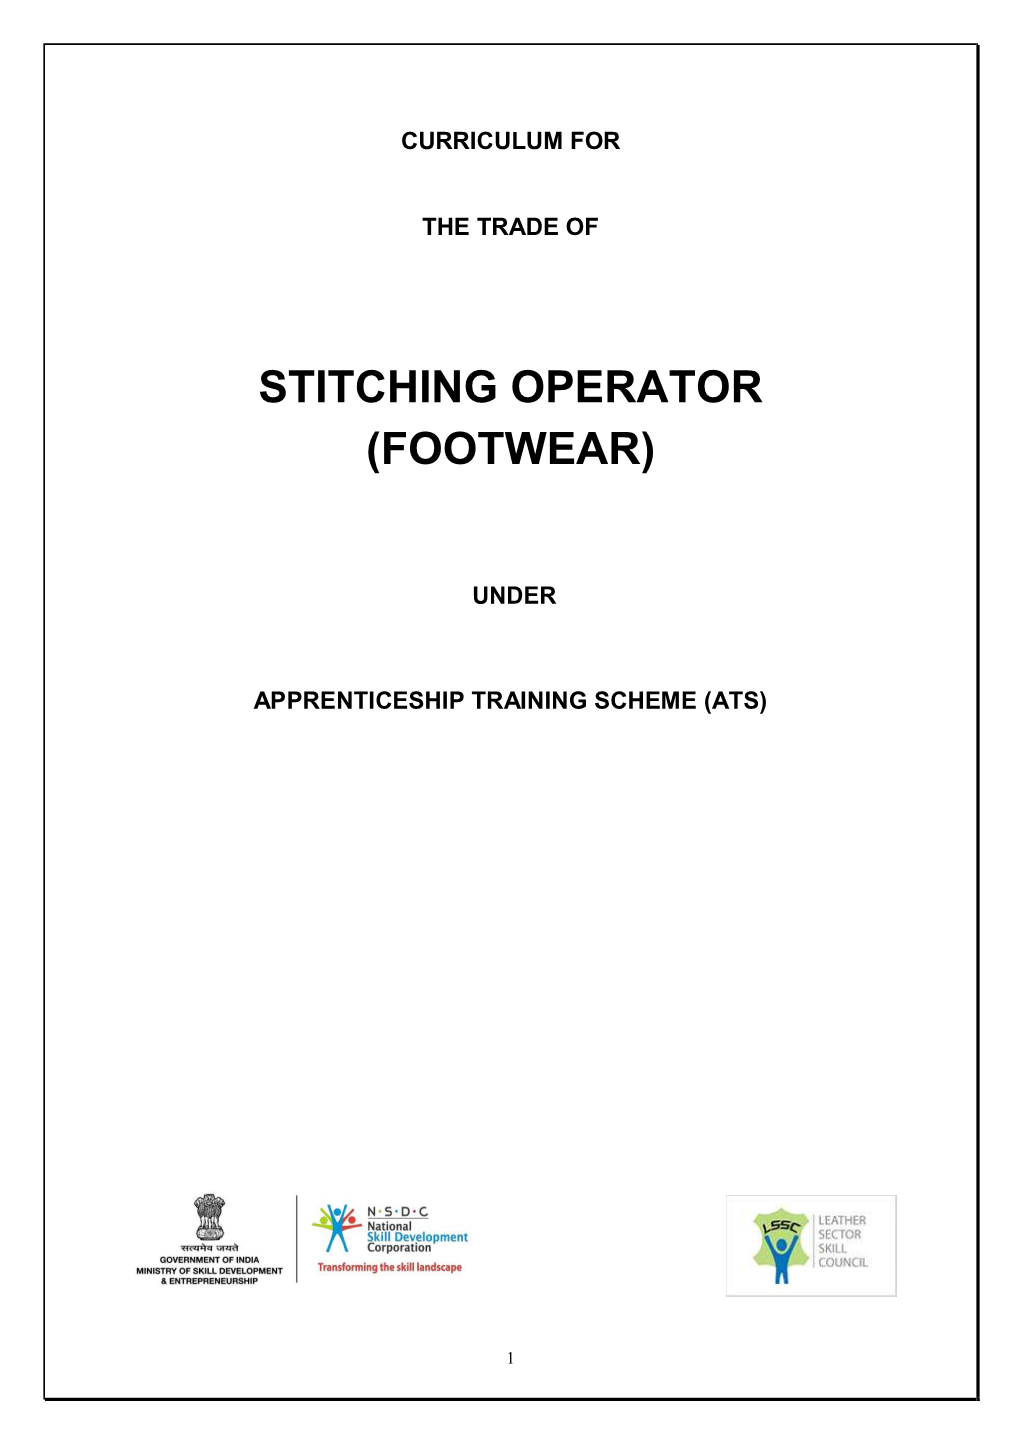 Stitching Operator (Footwear)